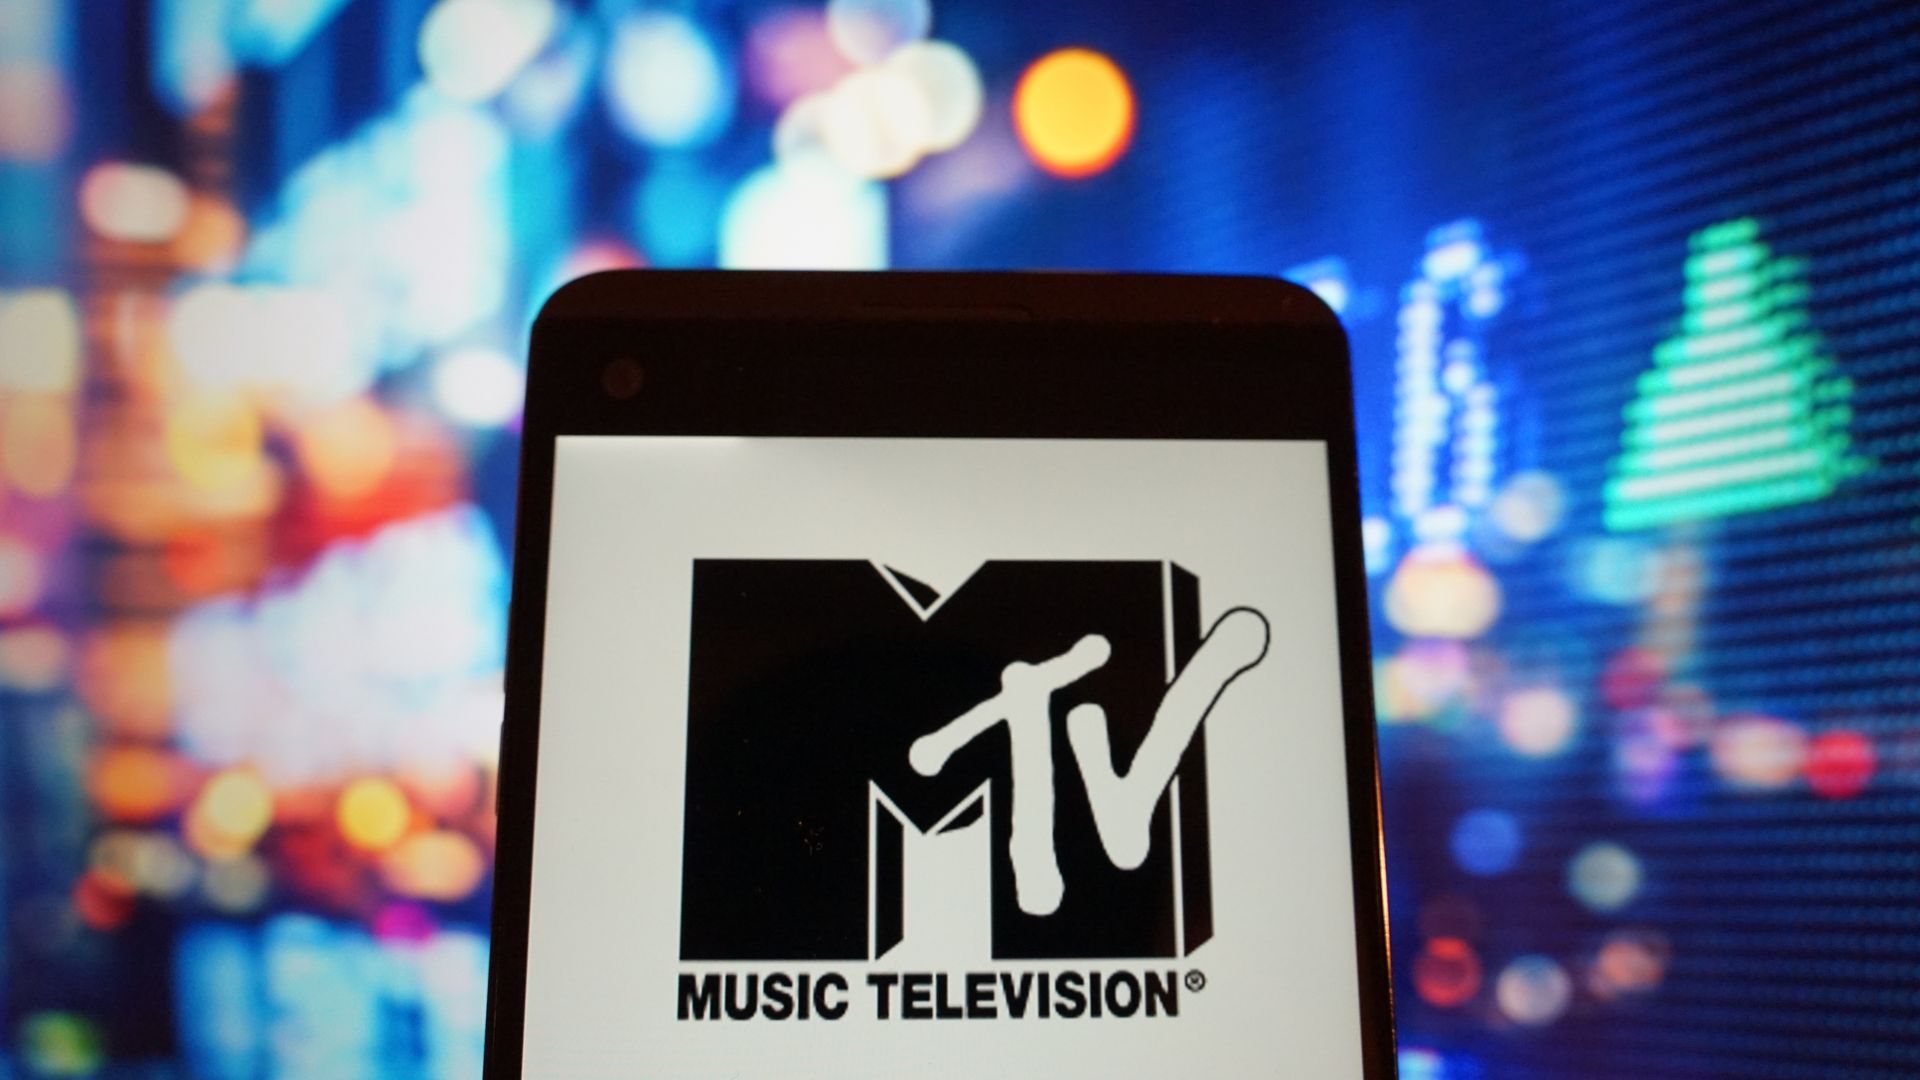 MTV logo on a phone screen